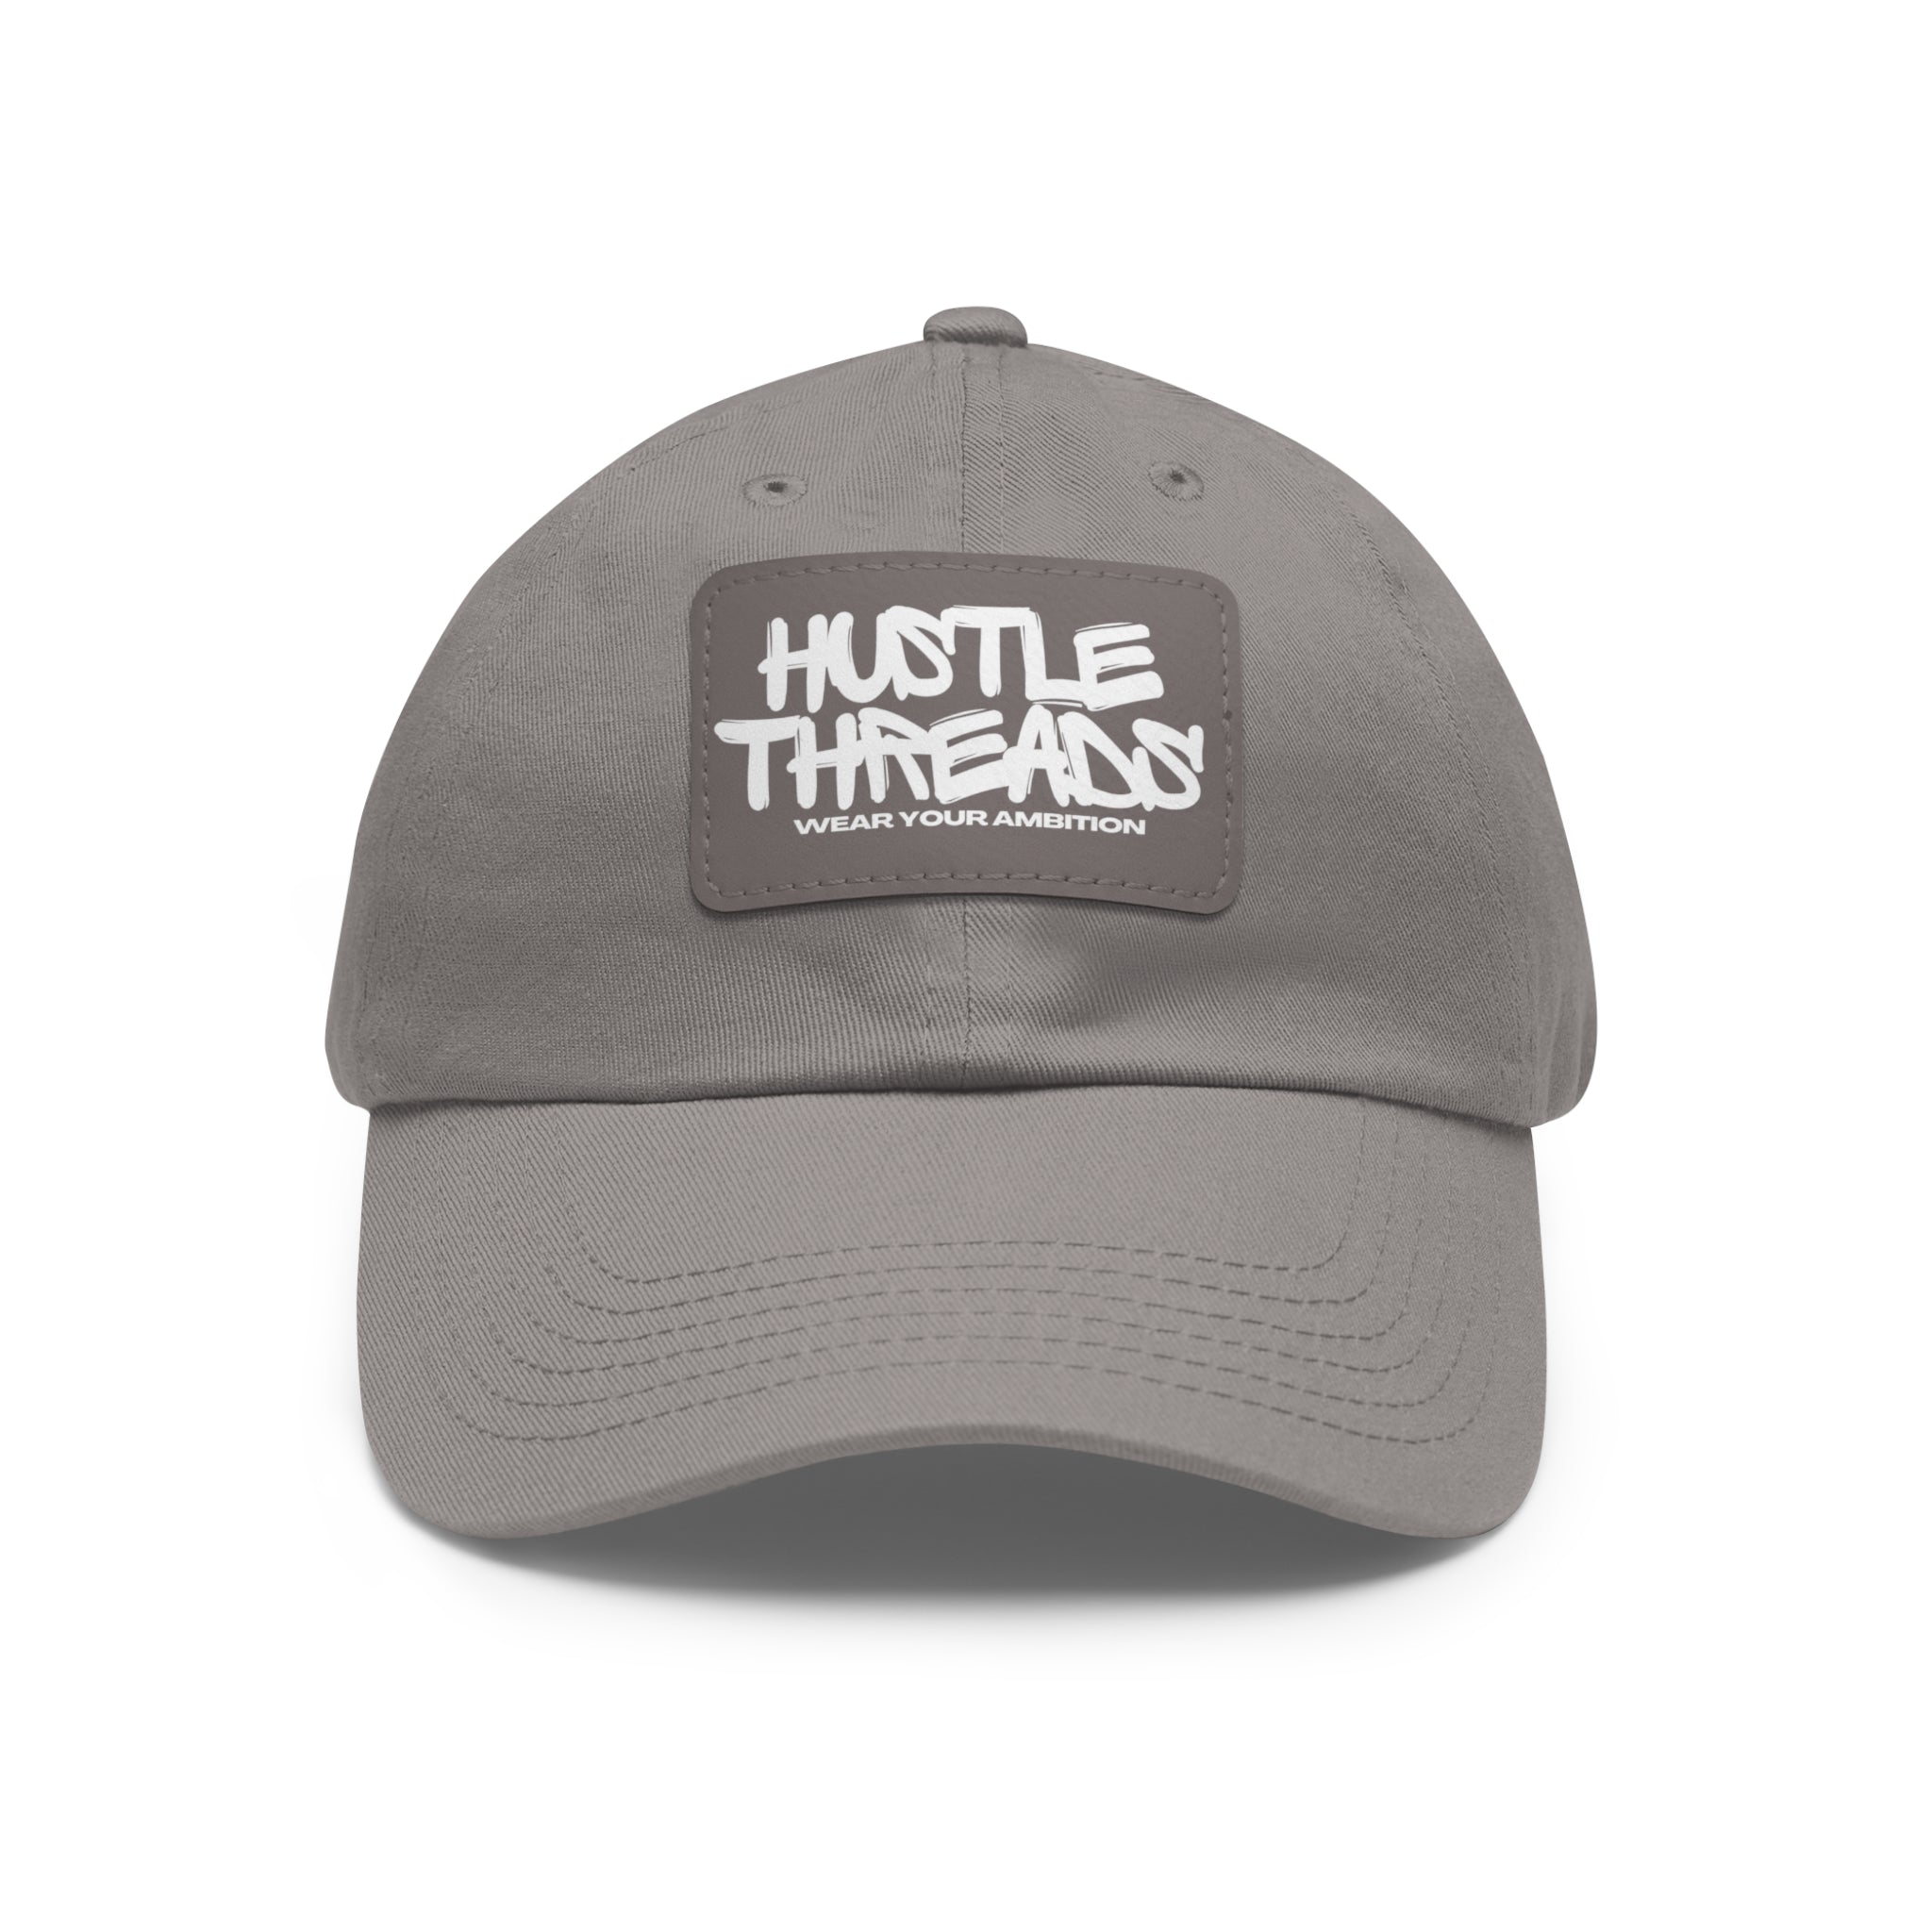 Hustle Threads Official Baseball Cap